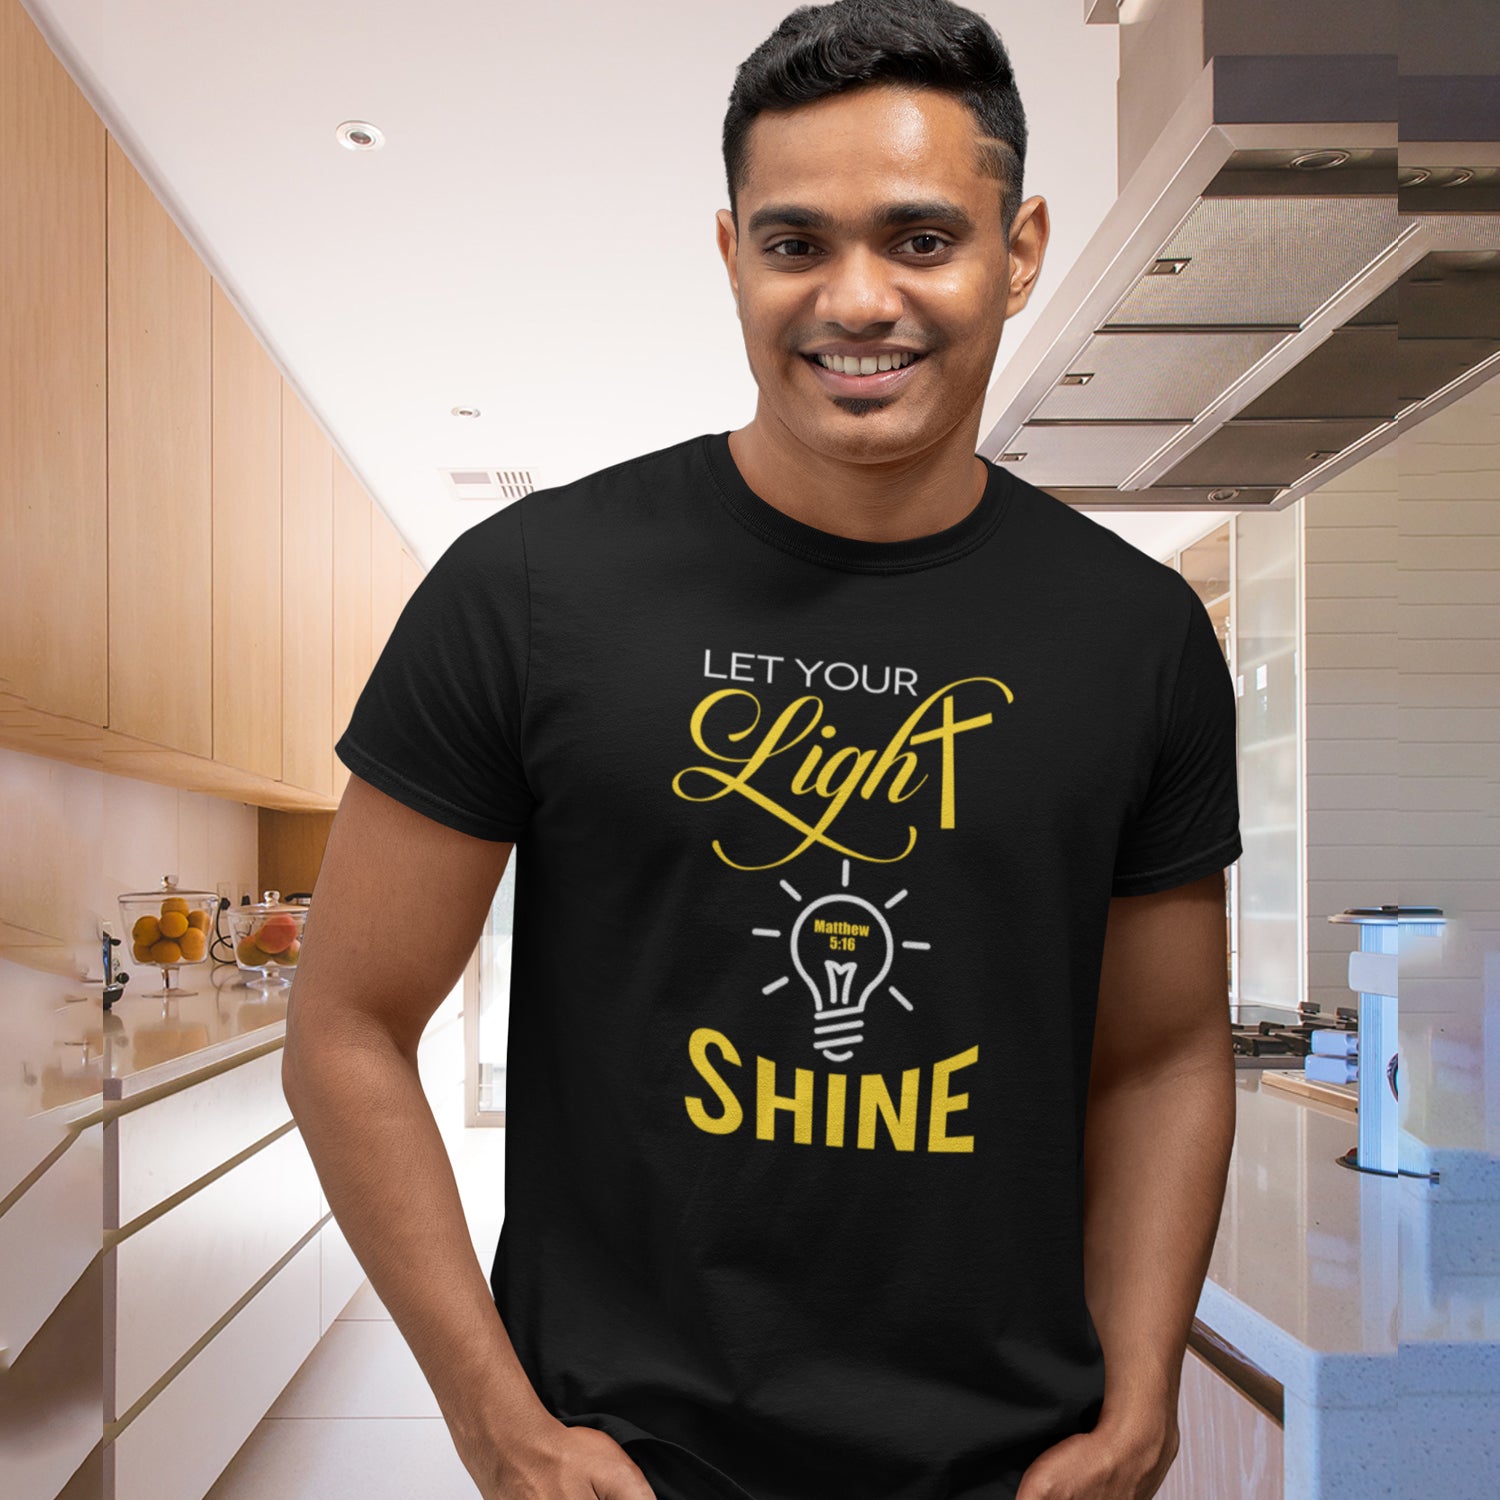 Let It Shine - T-Shirt for Men